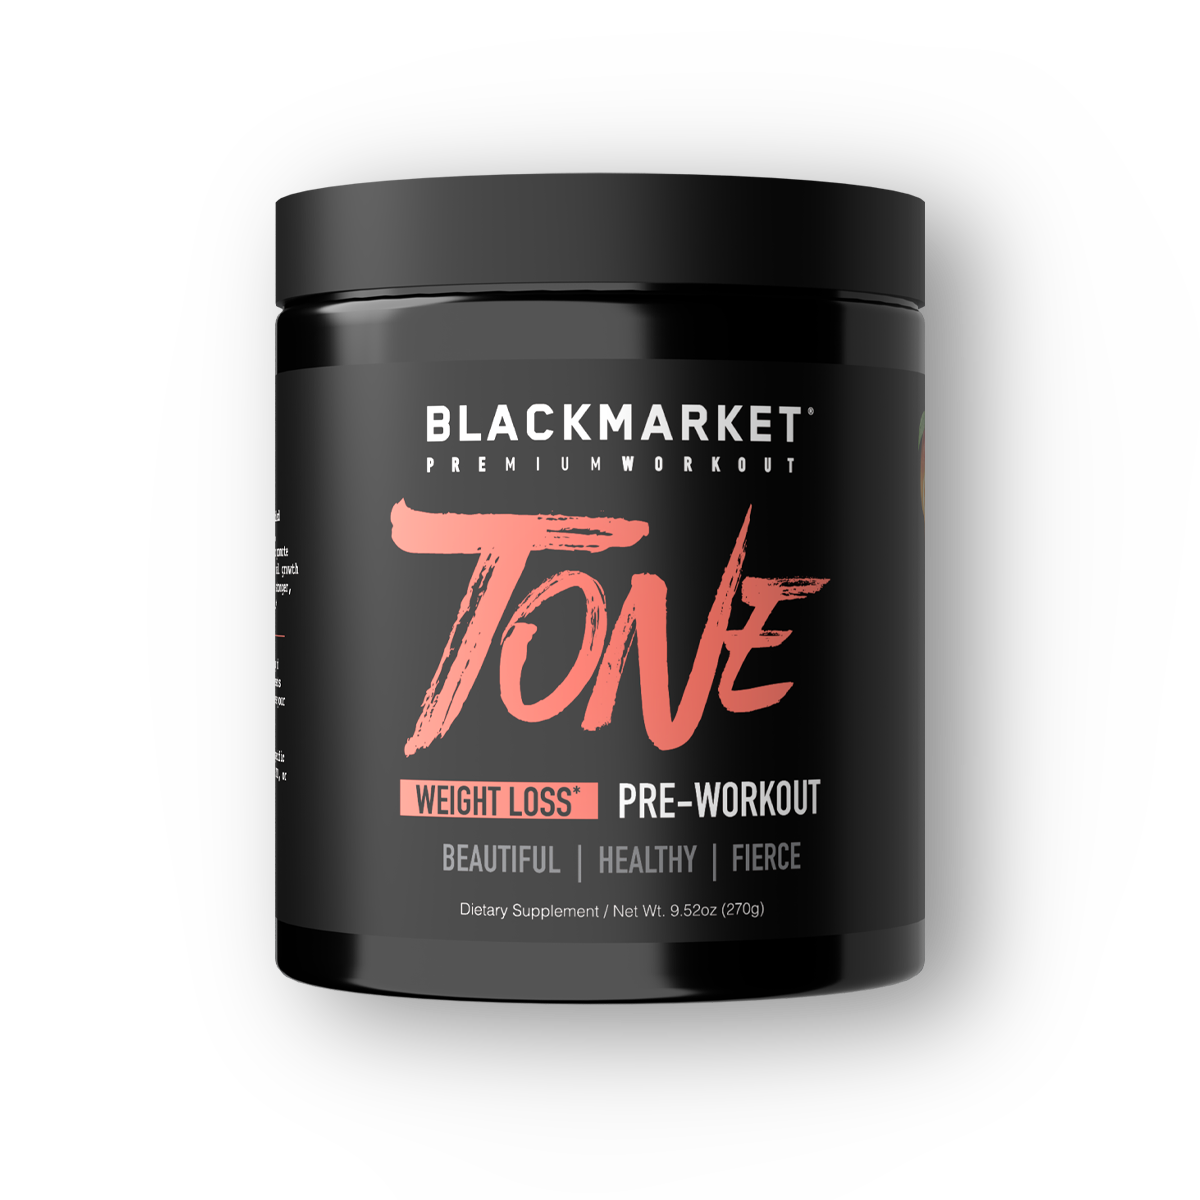 Black Market Tone